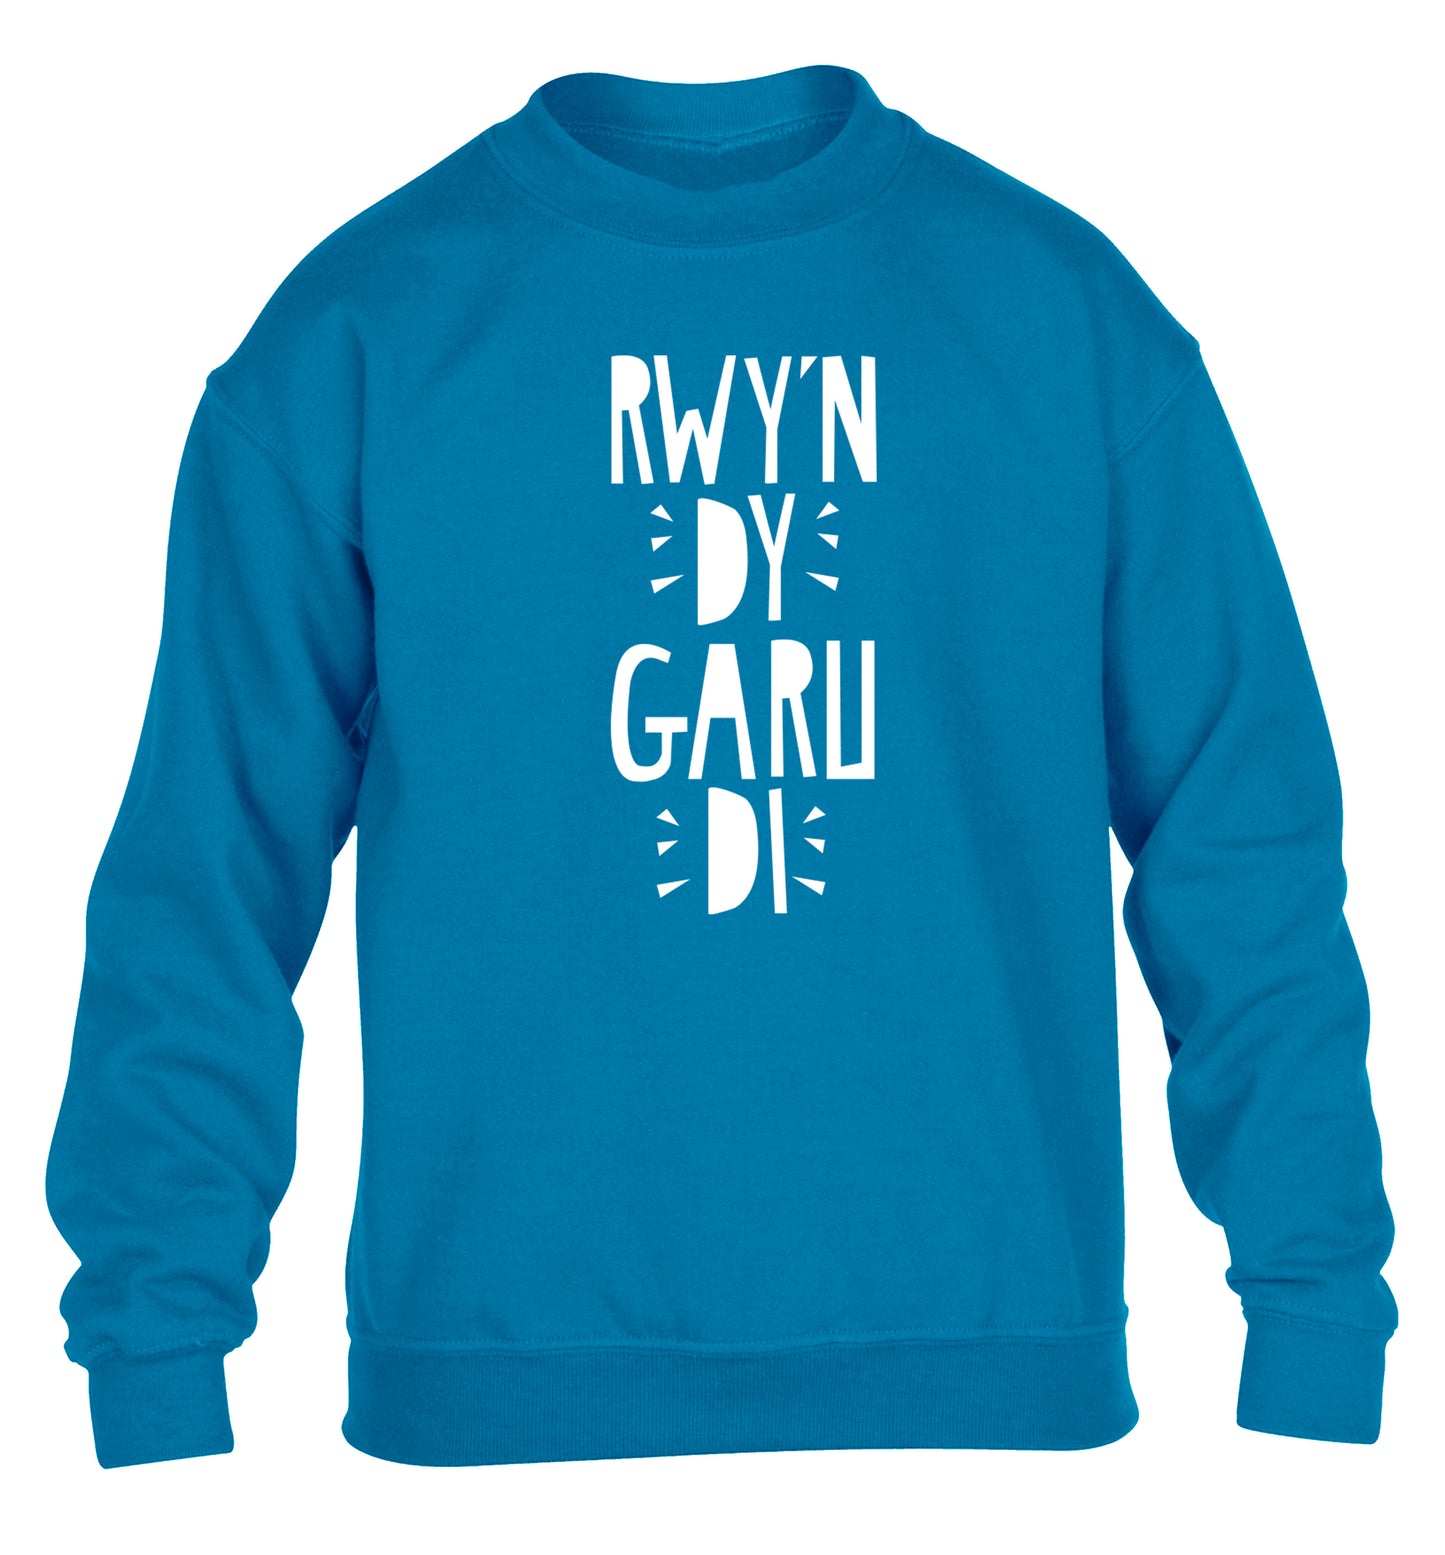 Rwy'n dy garu di - I love you children's blue sweater 12-13 Years